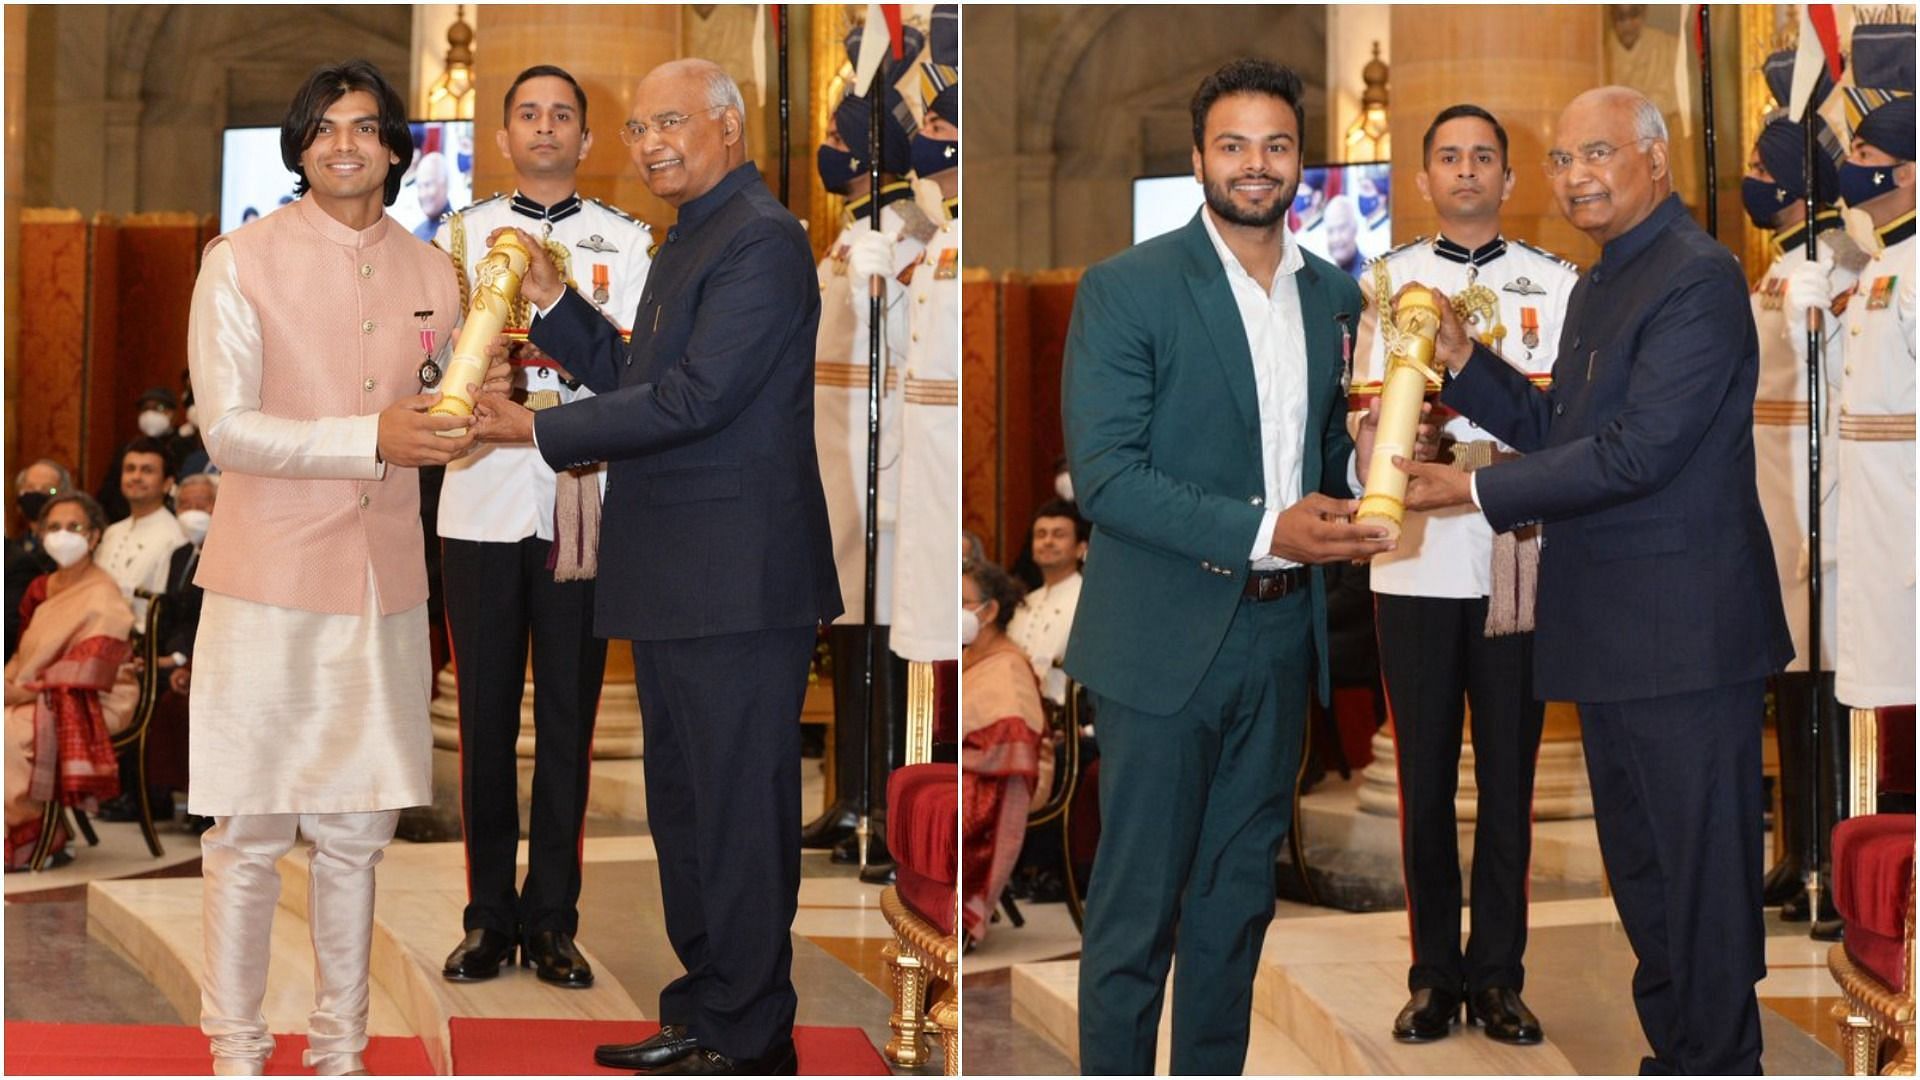 Neeraj Chopra, Sumit Antil receive Padma Shri honor from the President (Pic Credit: President twitter)